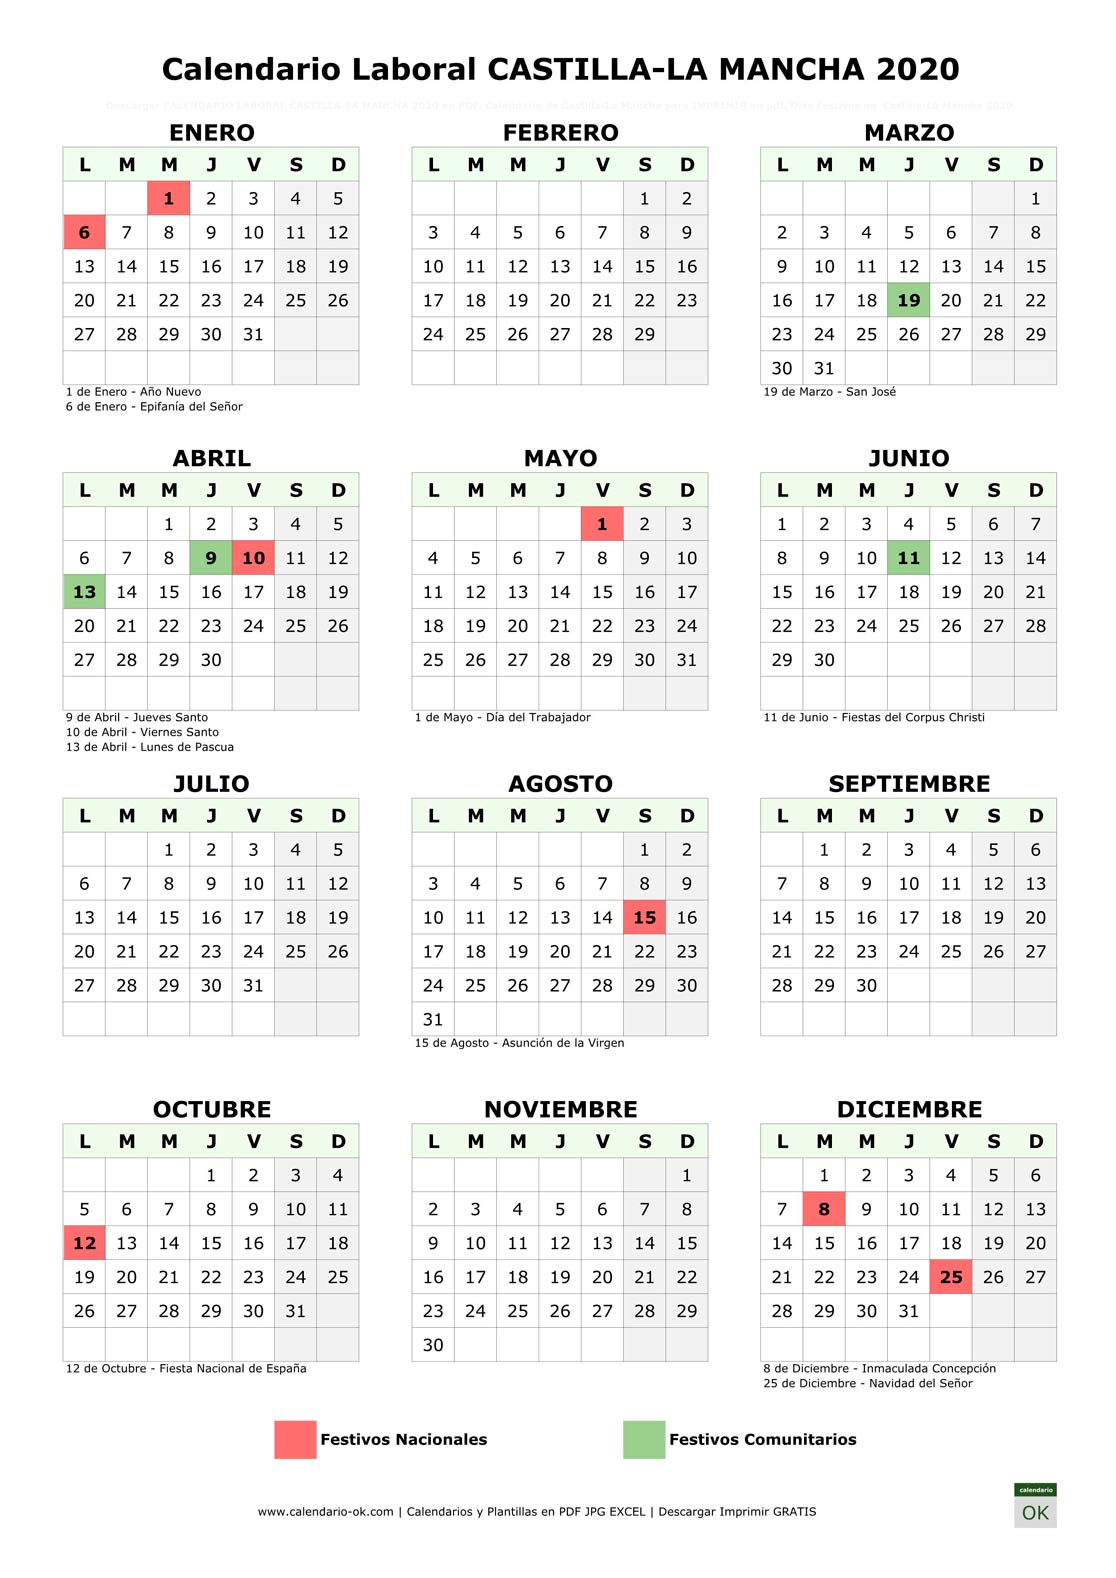 Calendario Laboral CASTILLA-LA MANCHA 2020